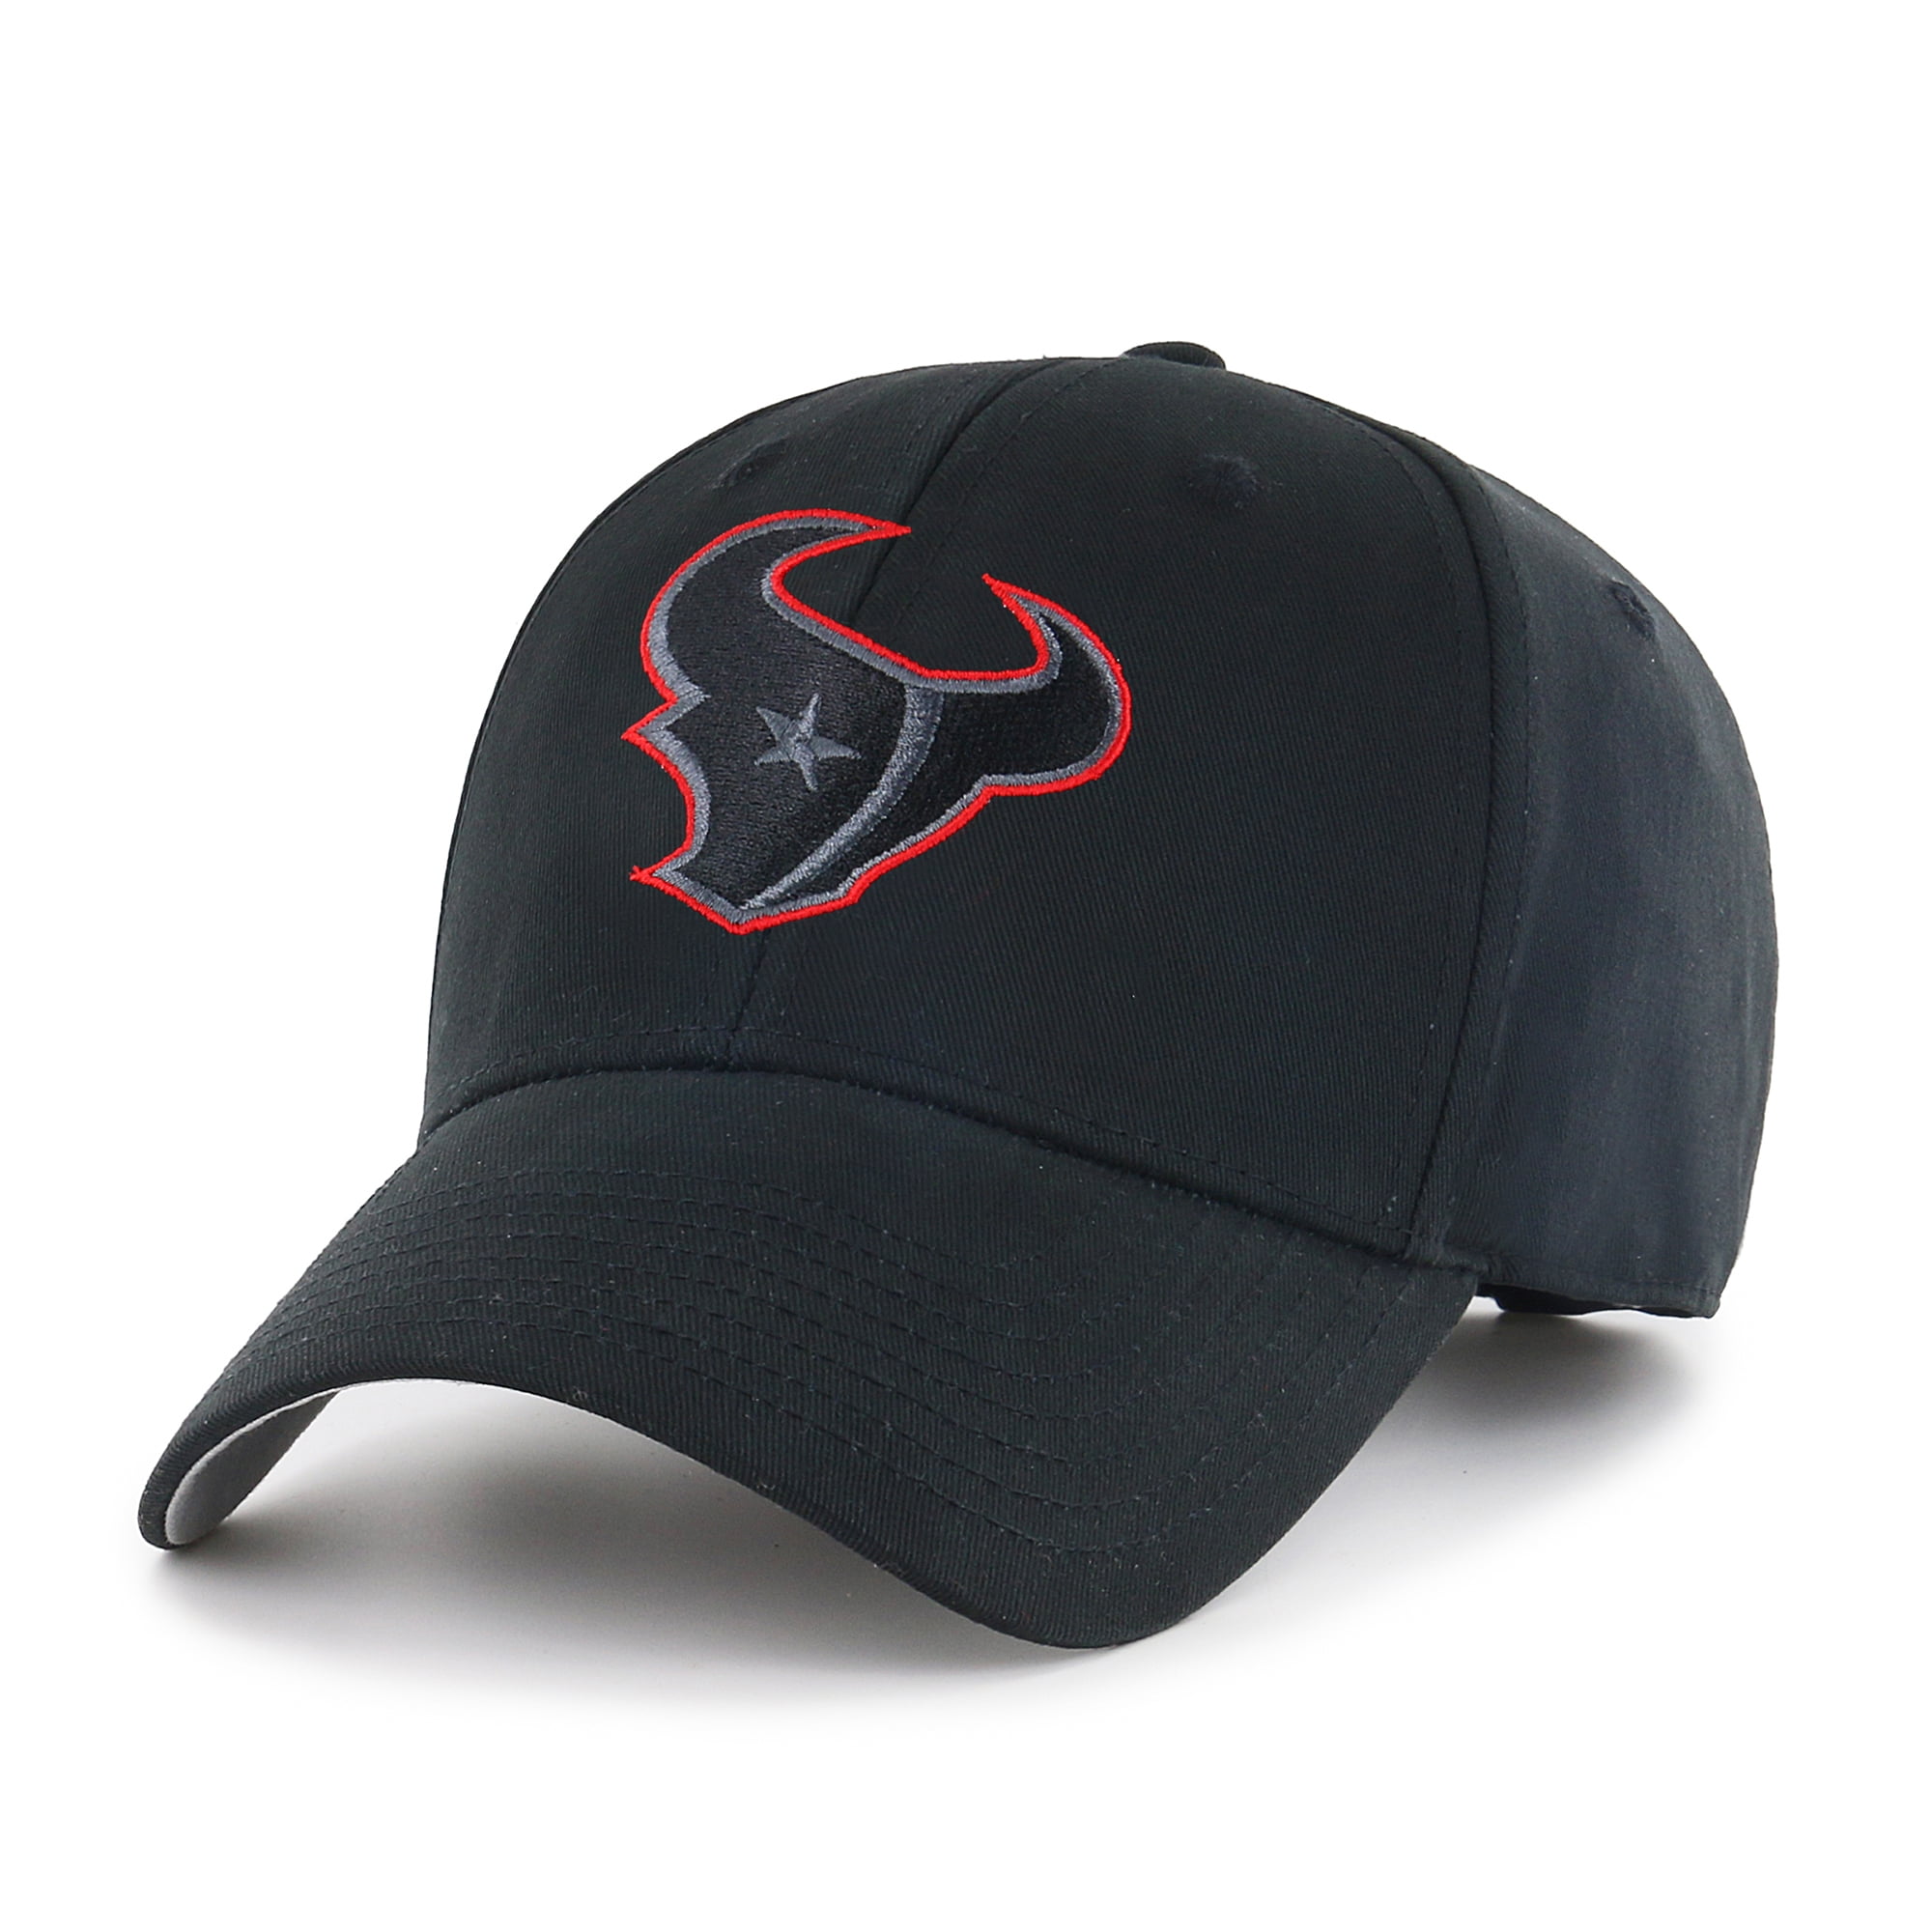 texans championship hat